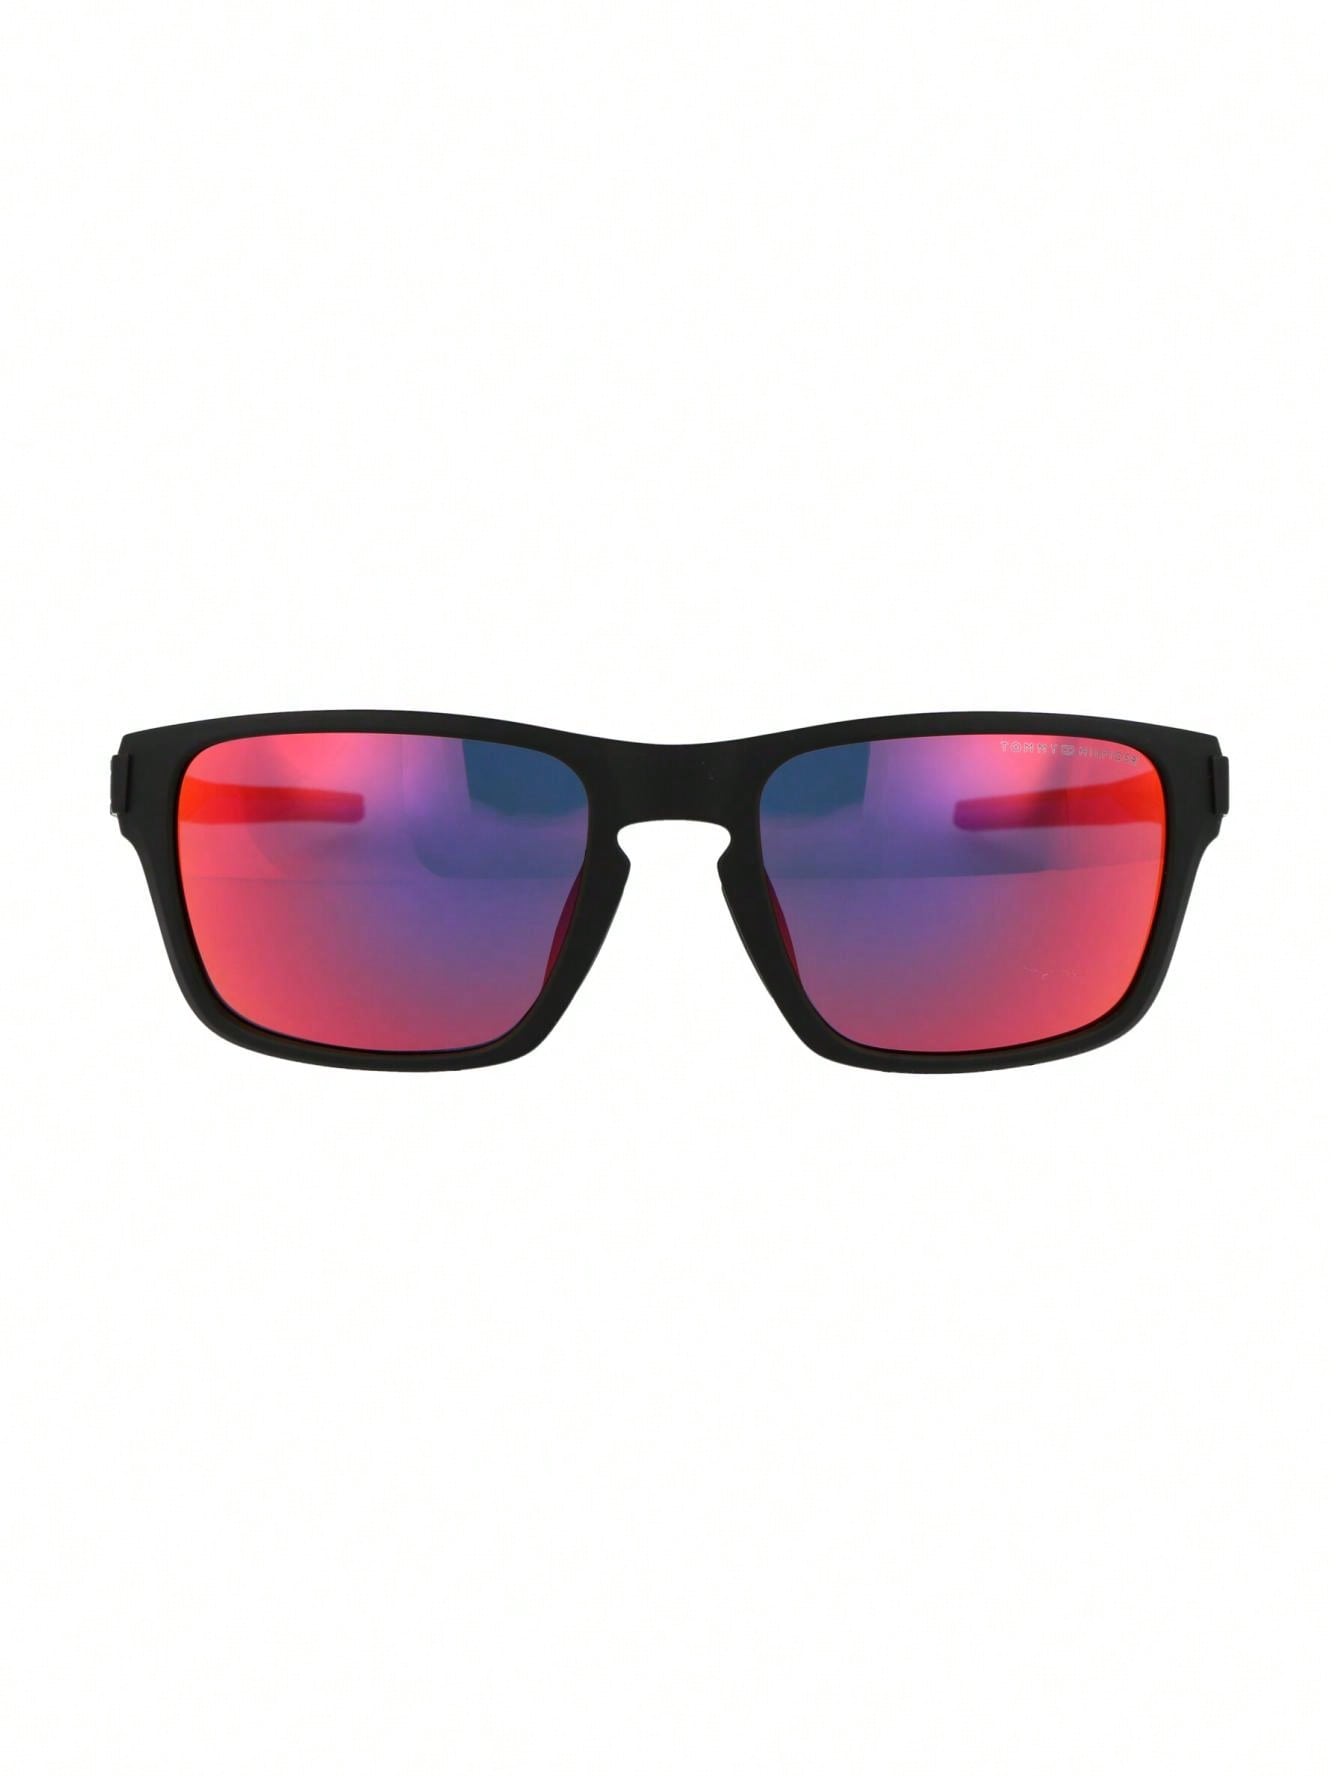 Мужские солнцезащитные очки Tommy Hilfiger DECOR TH1952S0VKPL, многоцветный мужские солнцезащитные очки tommy hilfiger decor tj0092s10a70 многоцветный